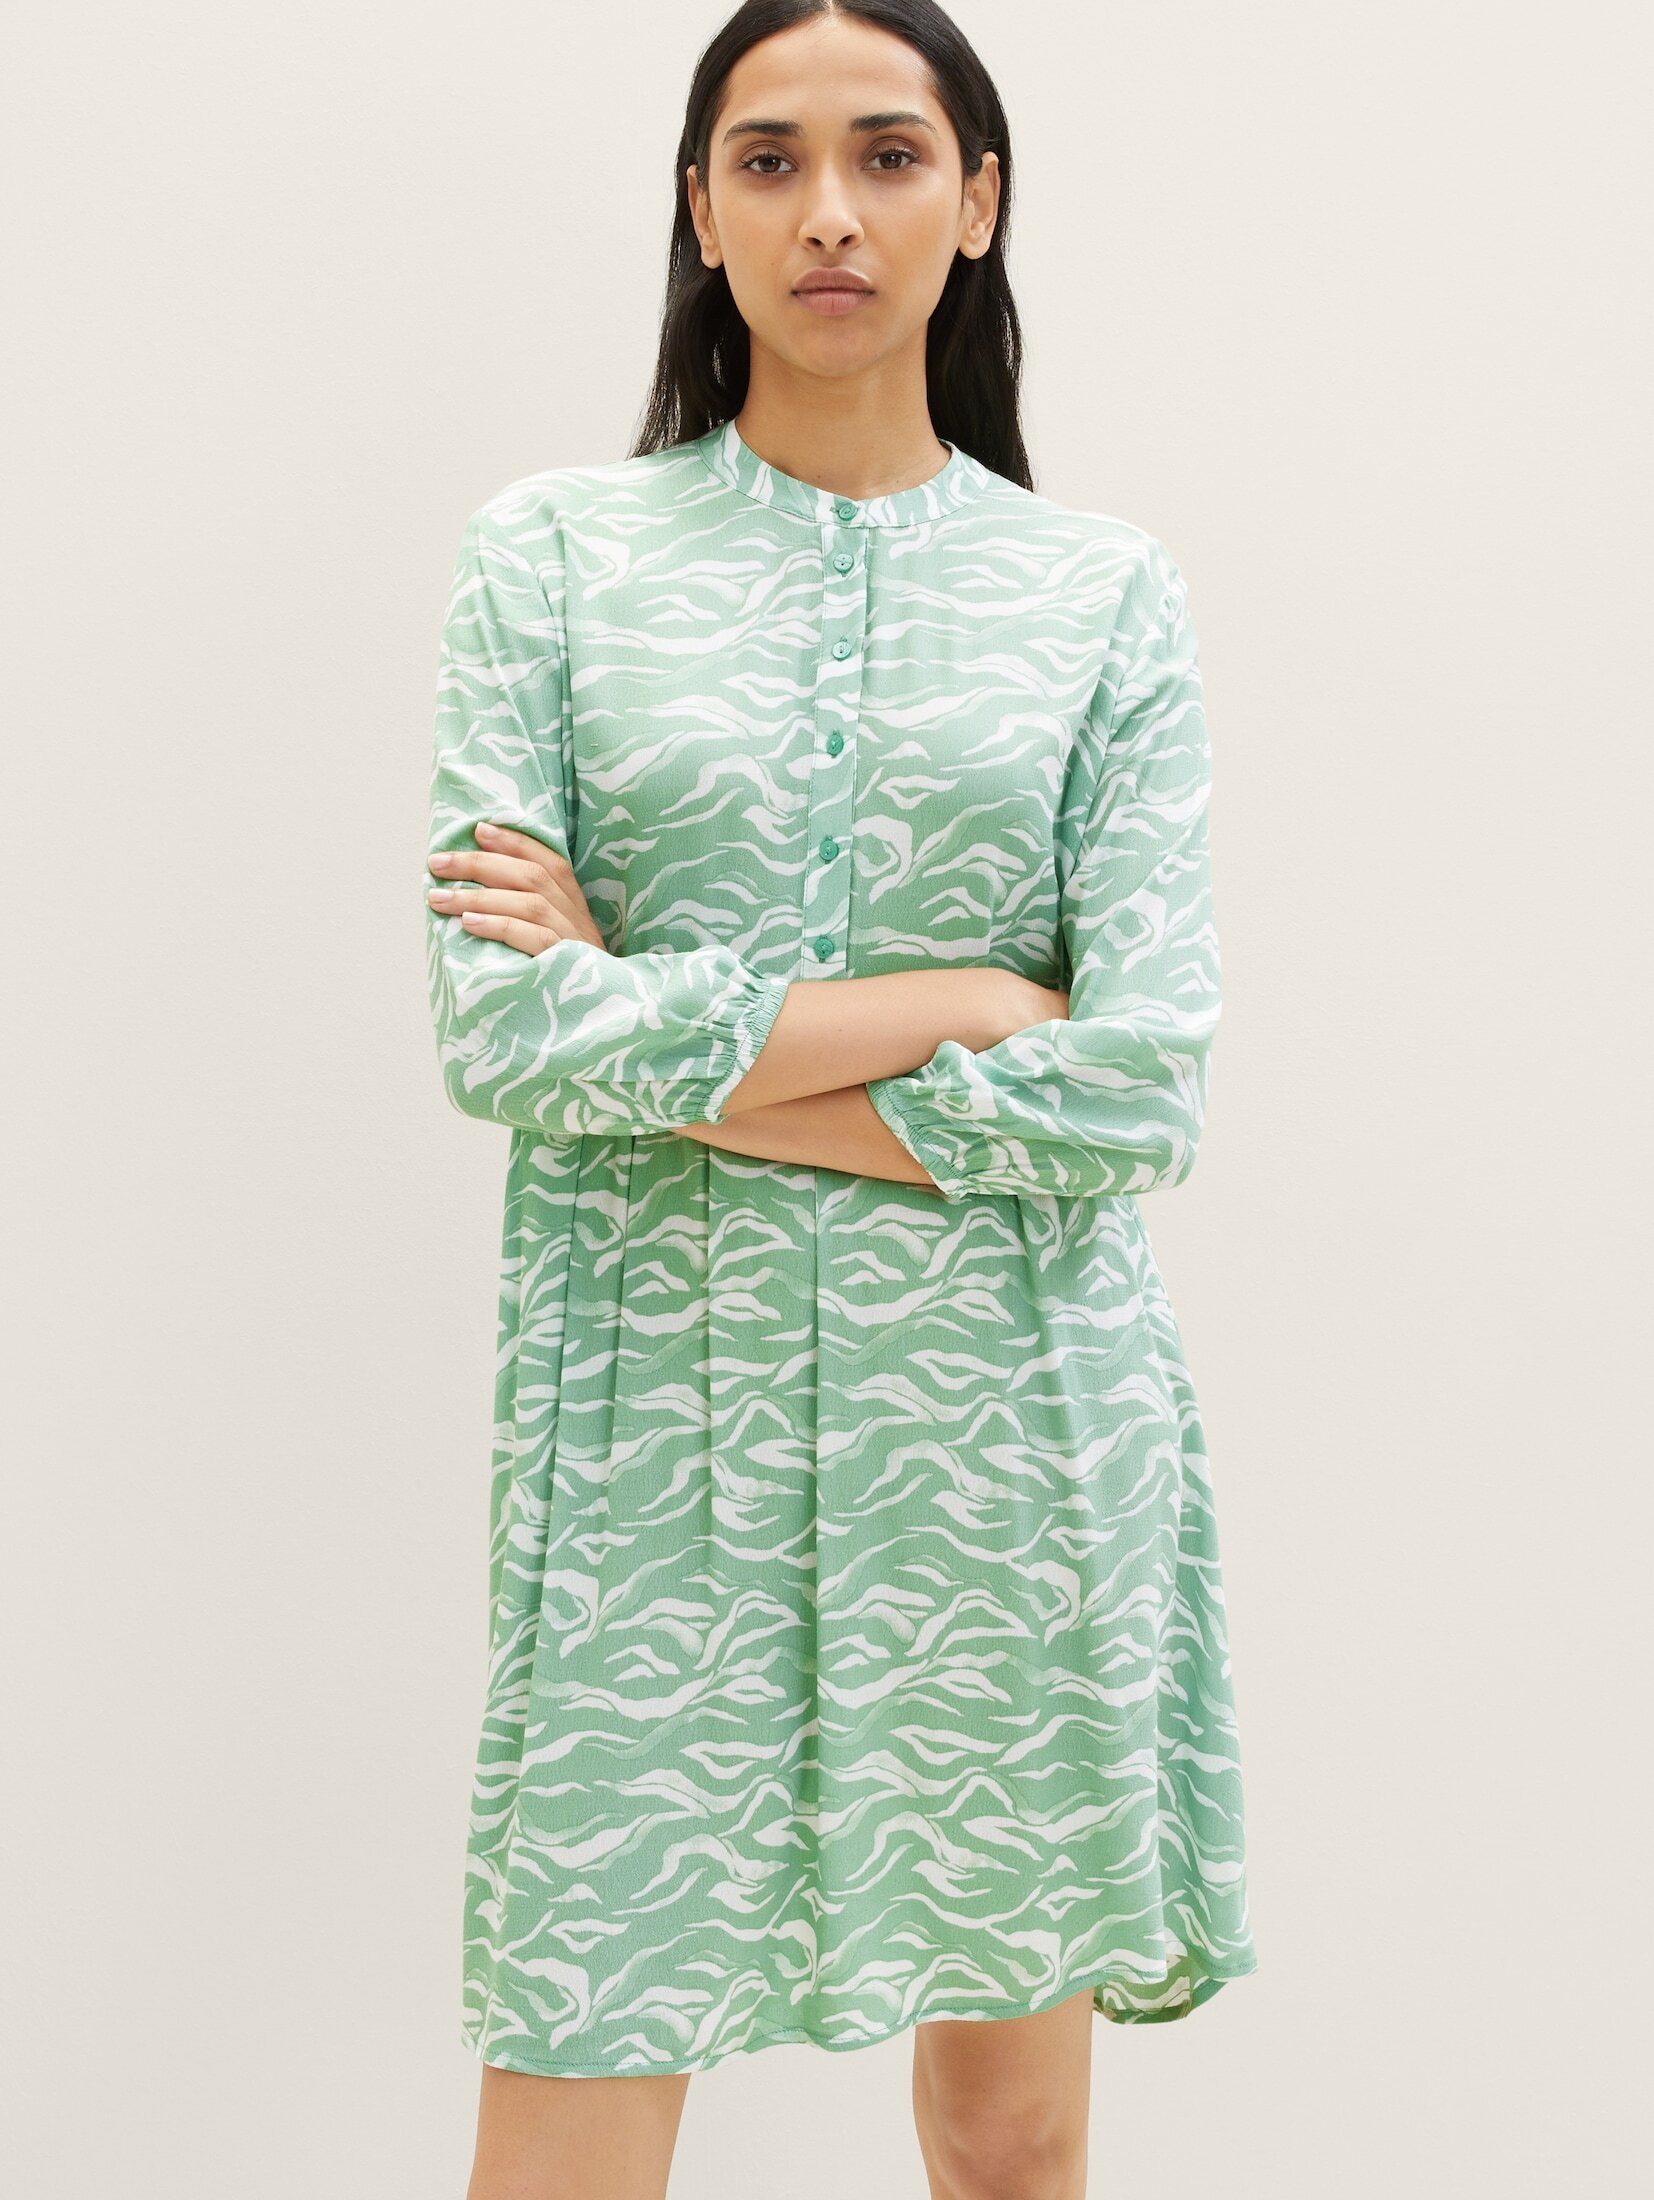 Kleid wavy TAILOR Allover-Print design green TOM small Jerseykleid mit